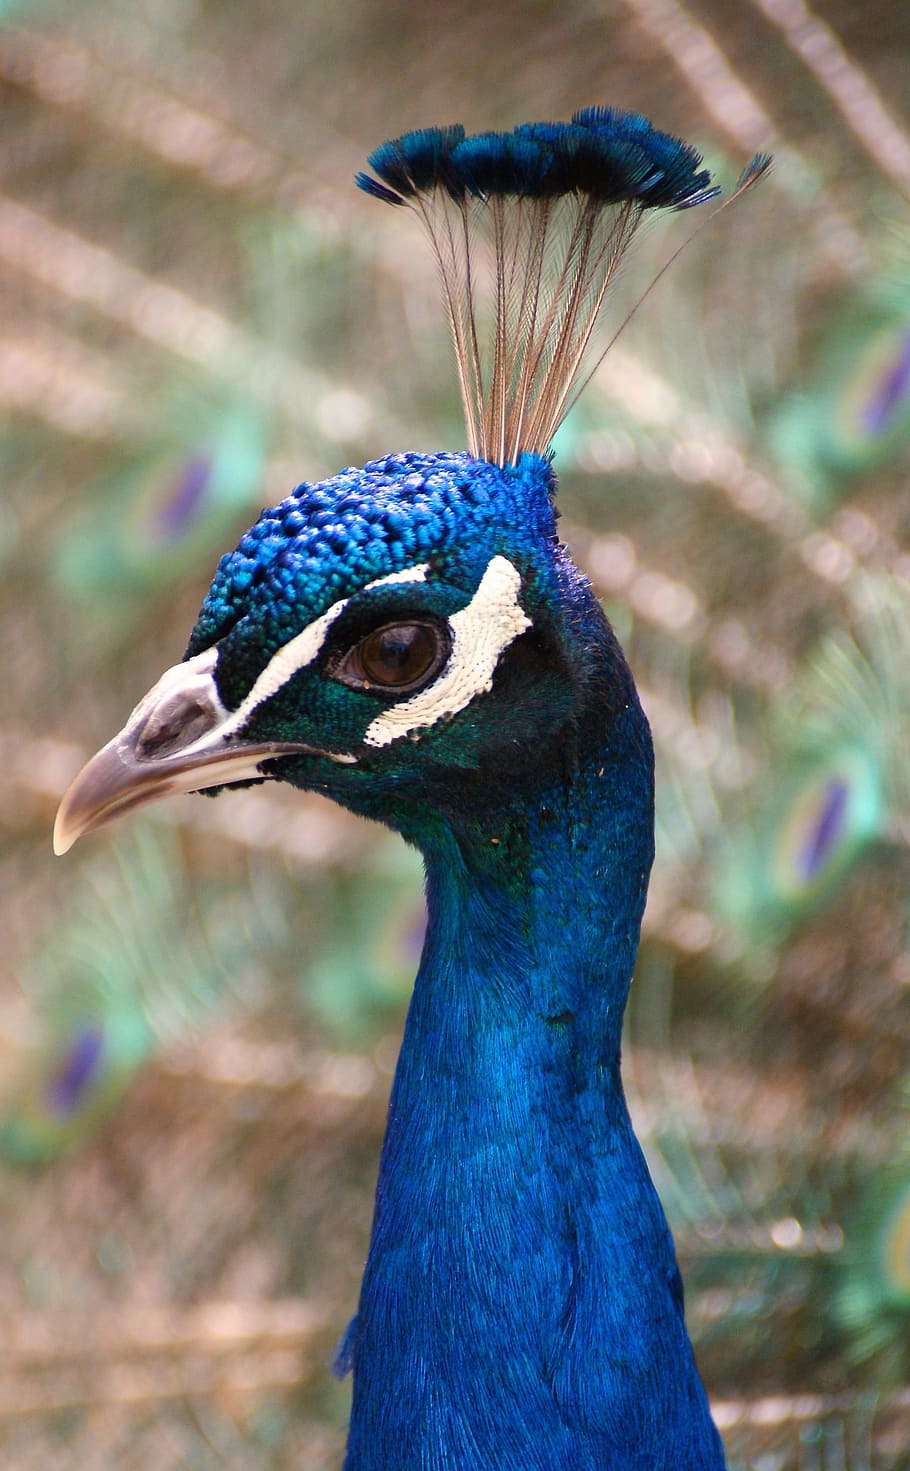 peacock, bird, feather, blue, animal, head, iridescent, plumage, color, animal world